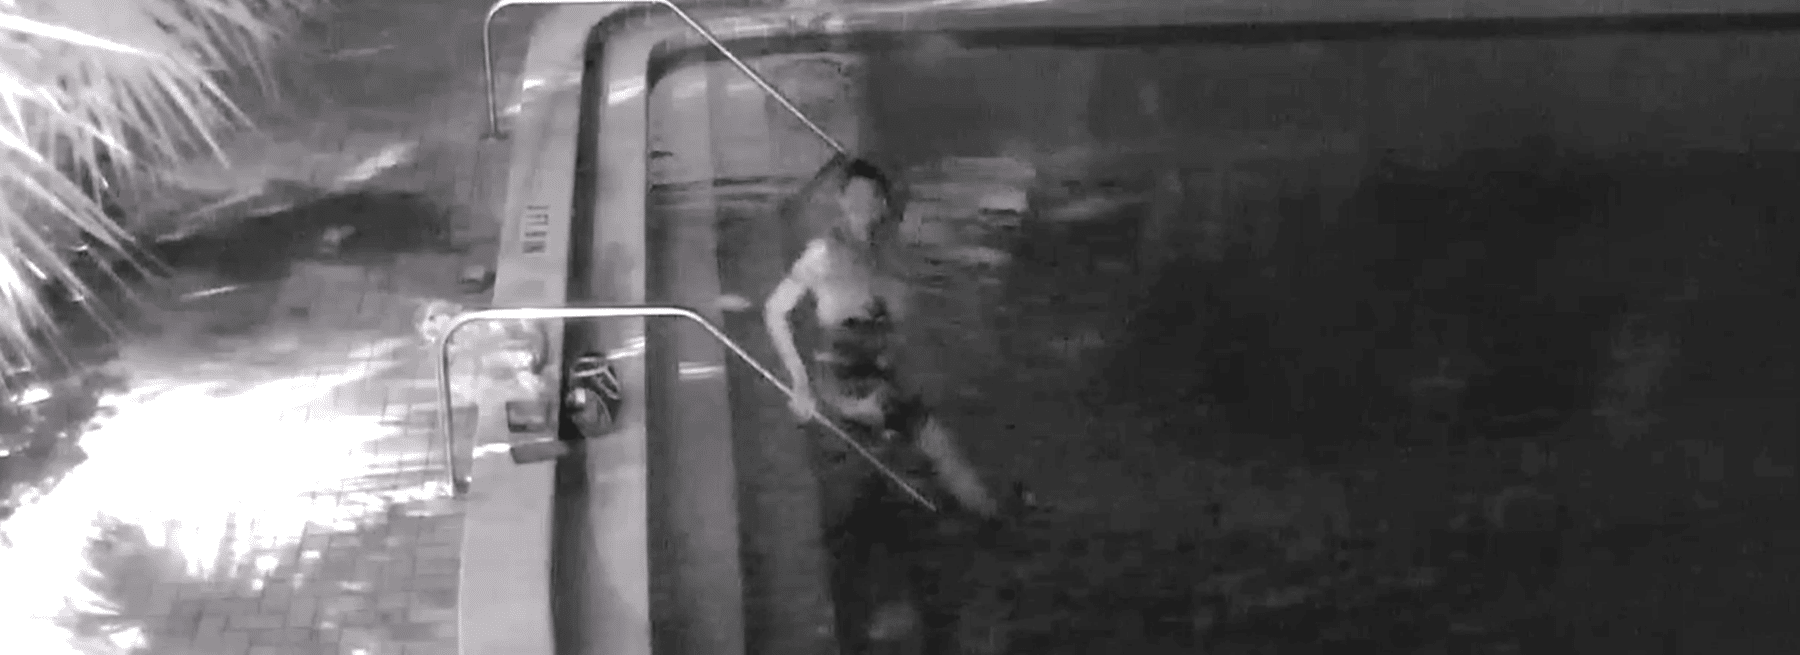 Late Night Trespasser Takes Dip in Pool